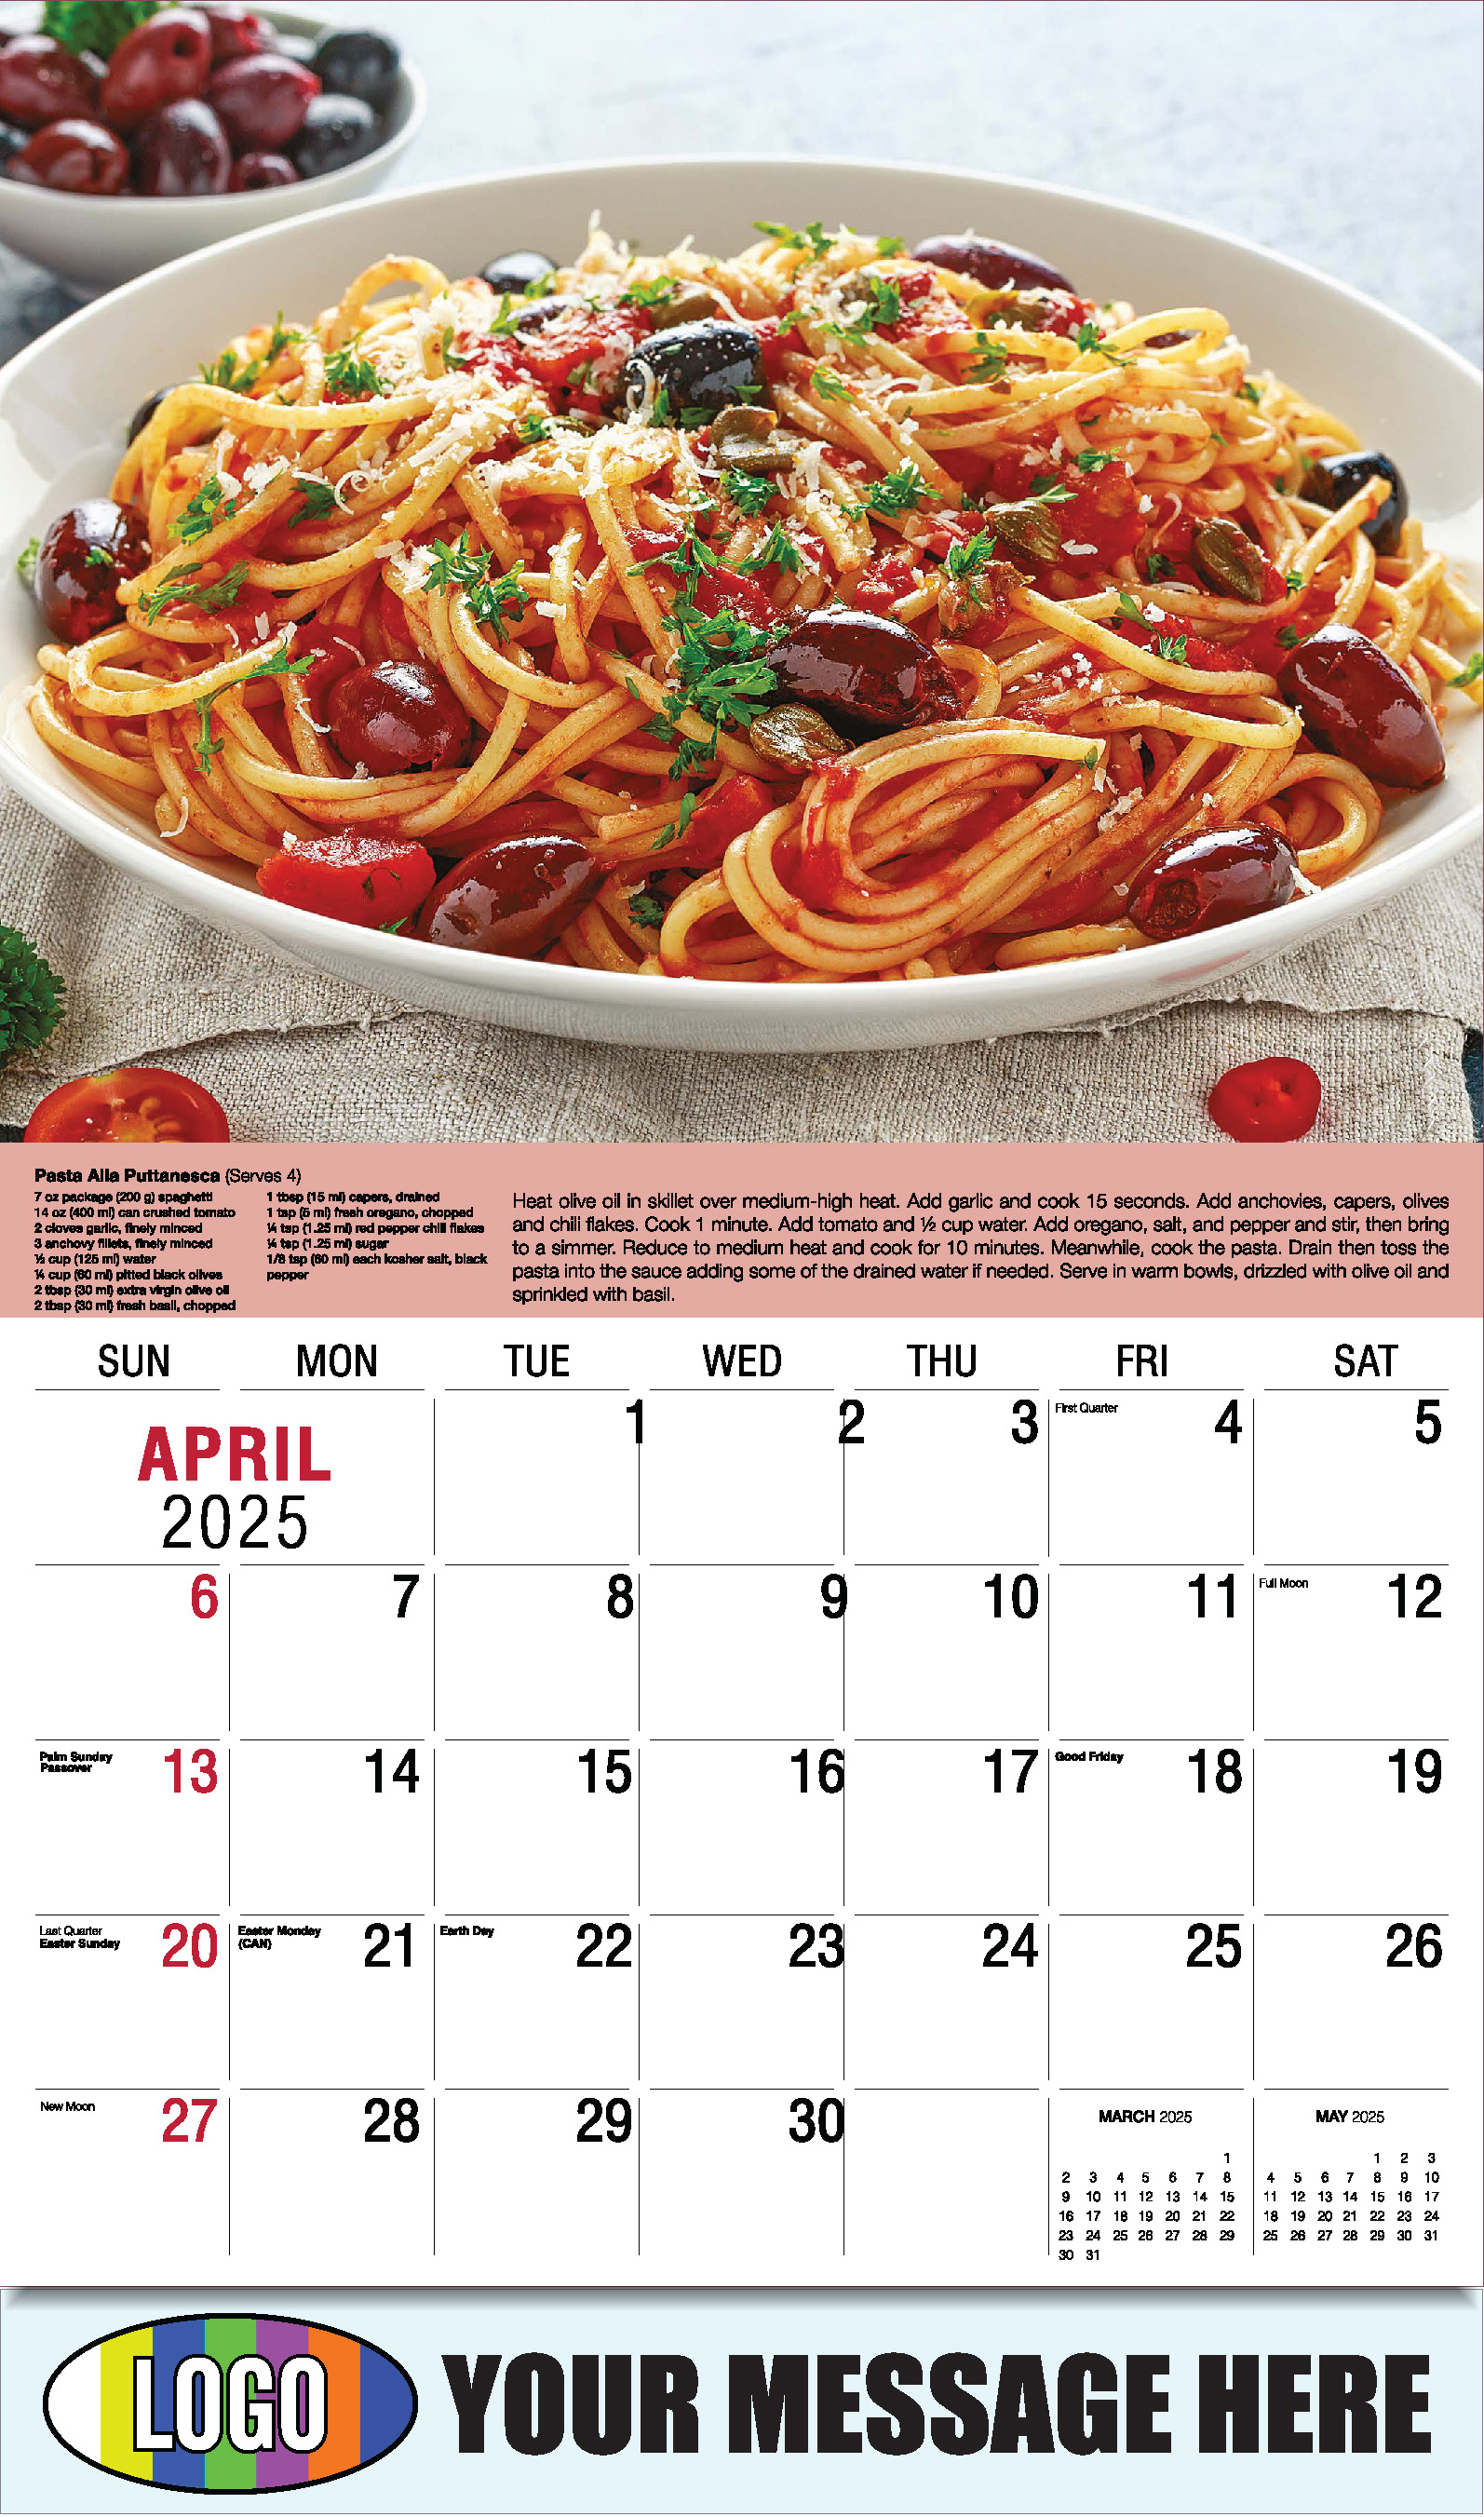 Recipes 2025 Business Promotional Calendar - April